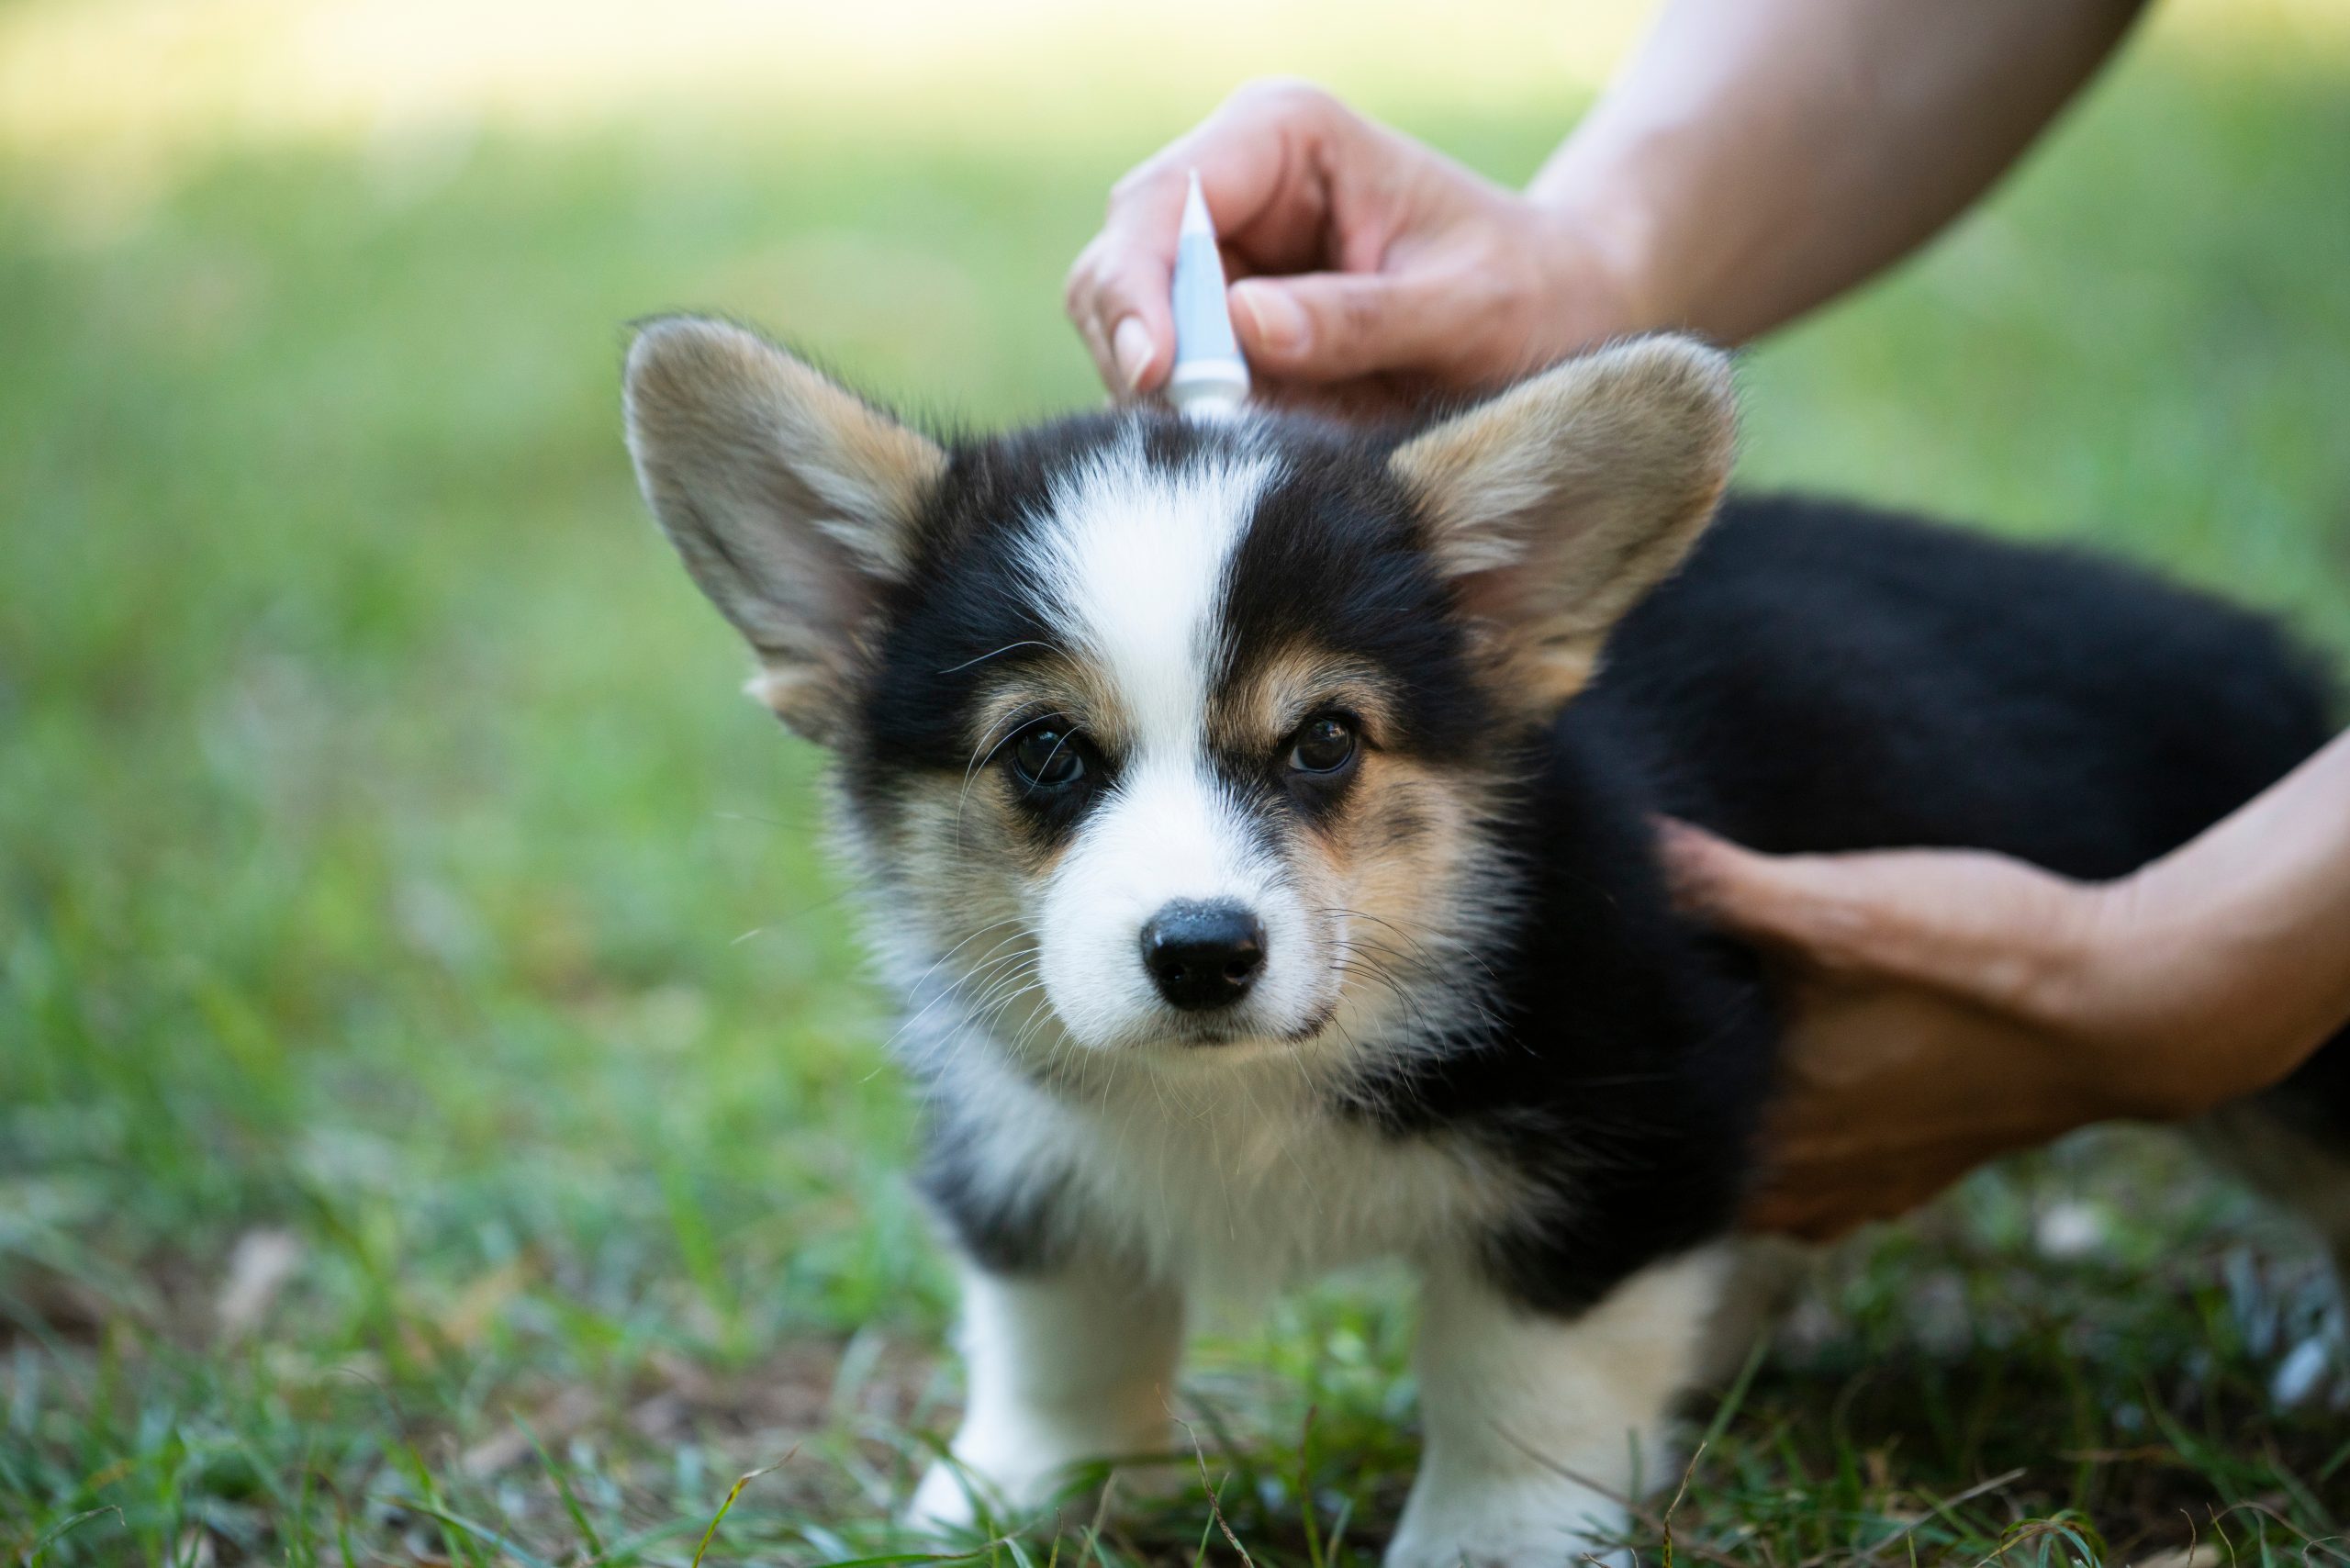 Dog tick and flea prevention treatment